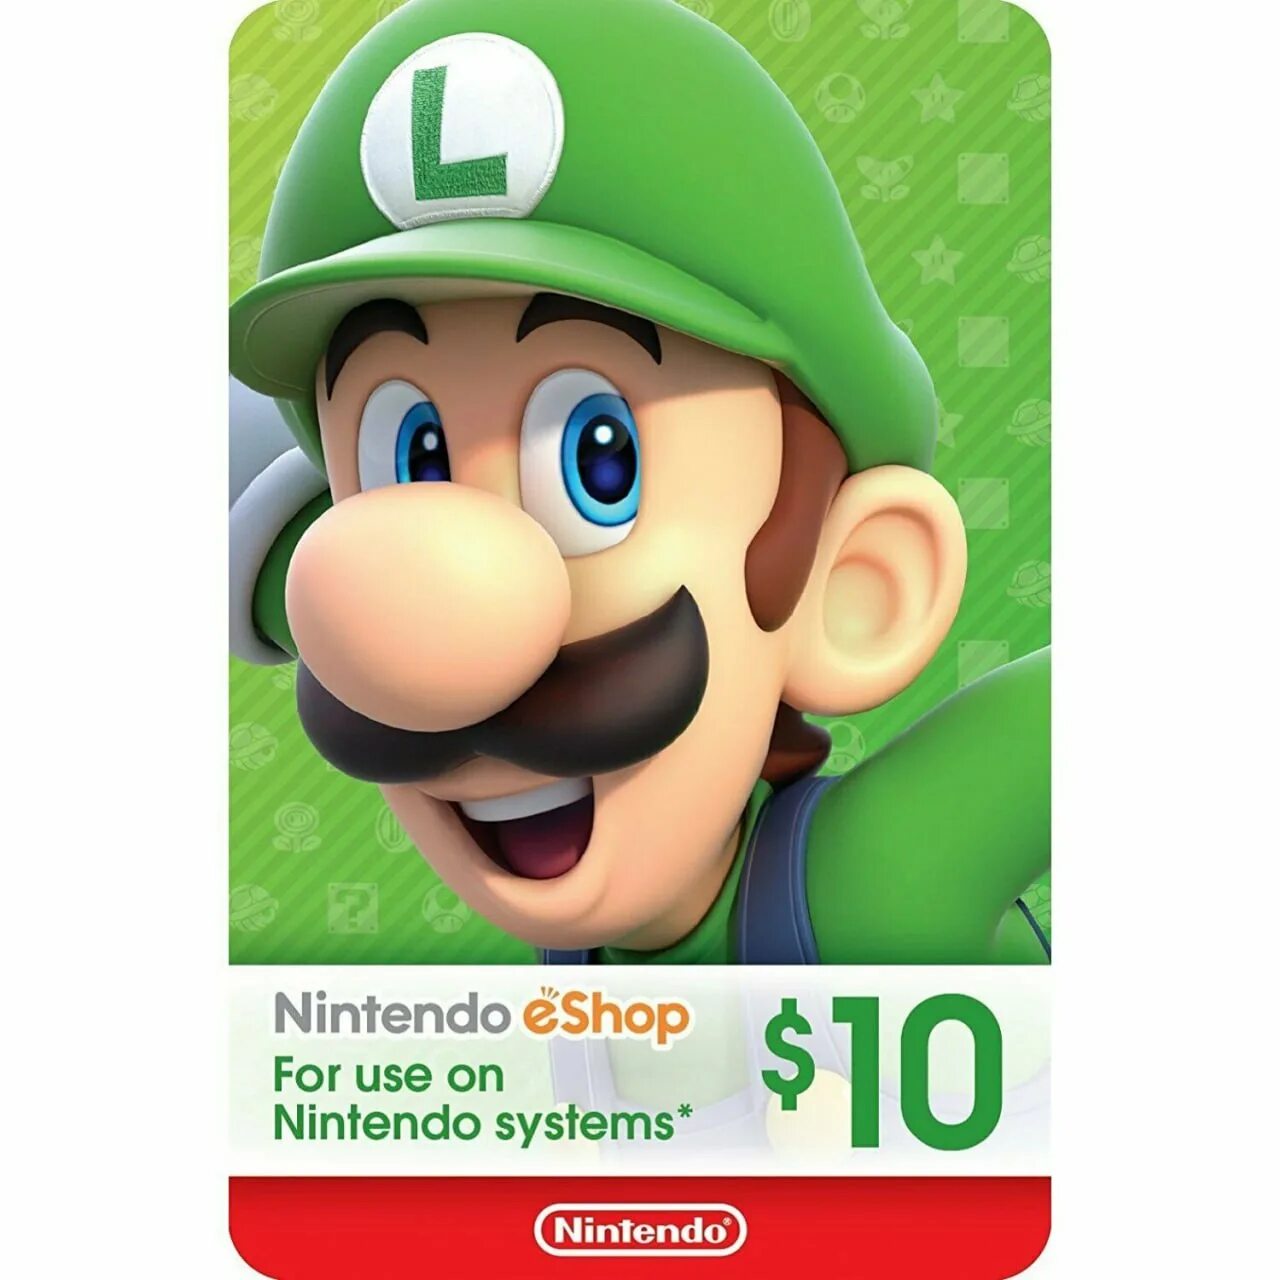 Nintendo eshop Card 10$. Nintendo eshop 10 Gift Card. Nintendo eshop 10 USD. 10 USD Nintendo eshop Gift Card. Nintendo e